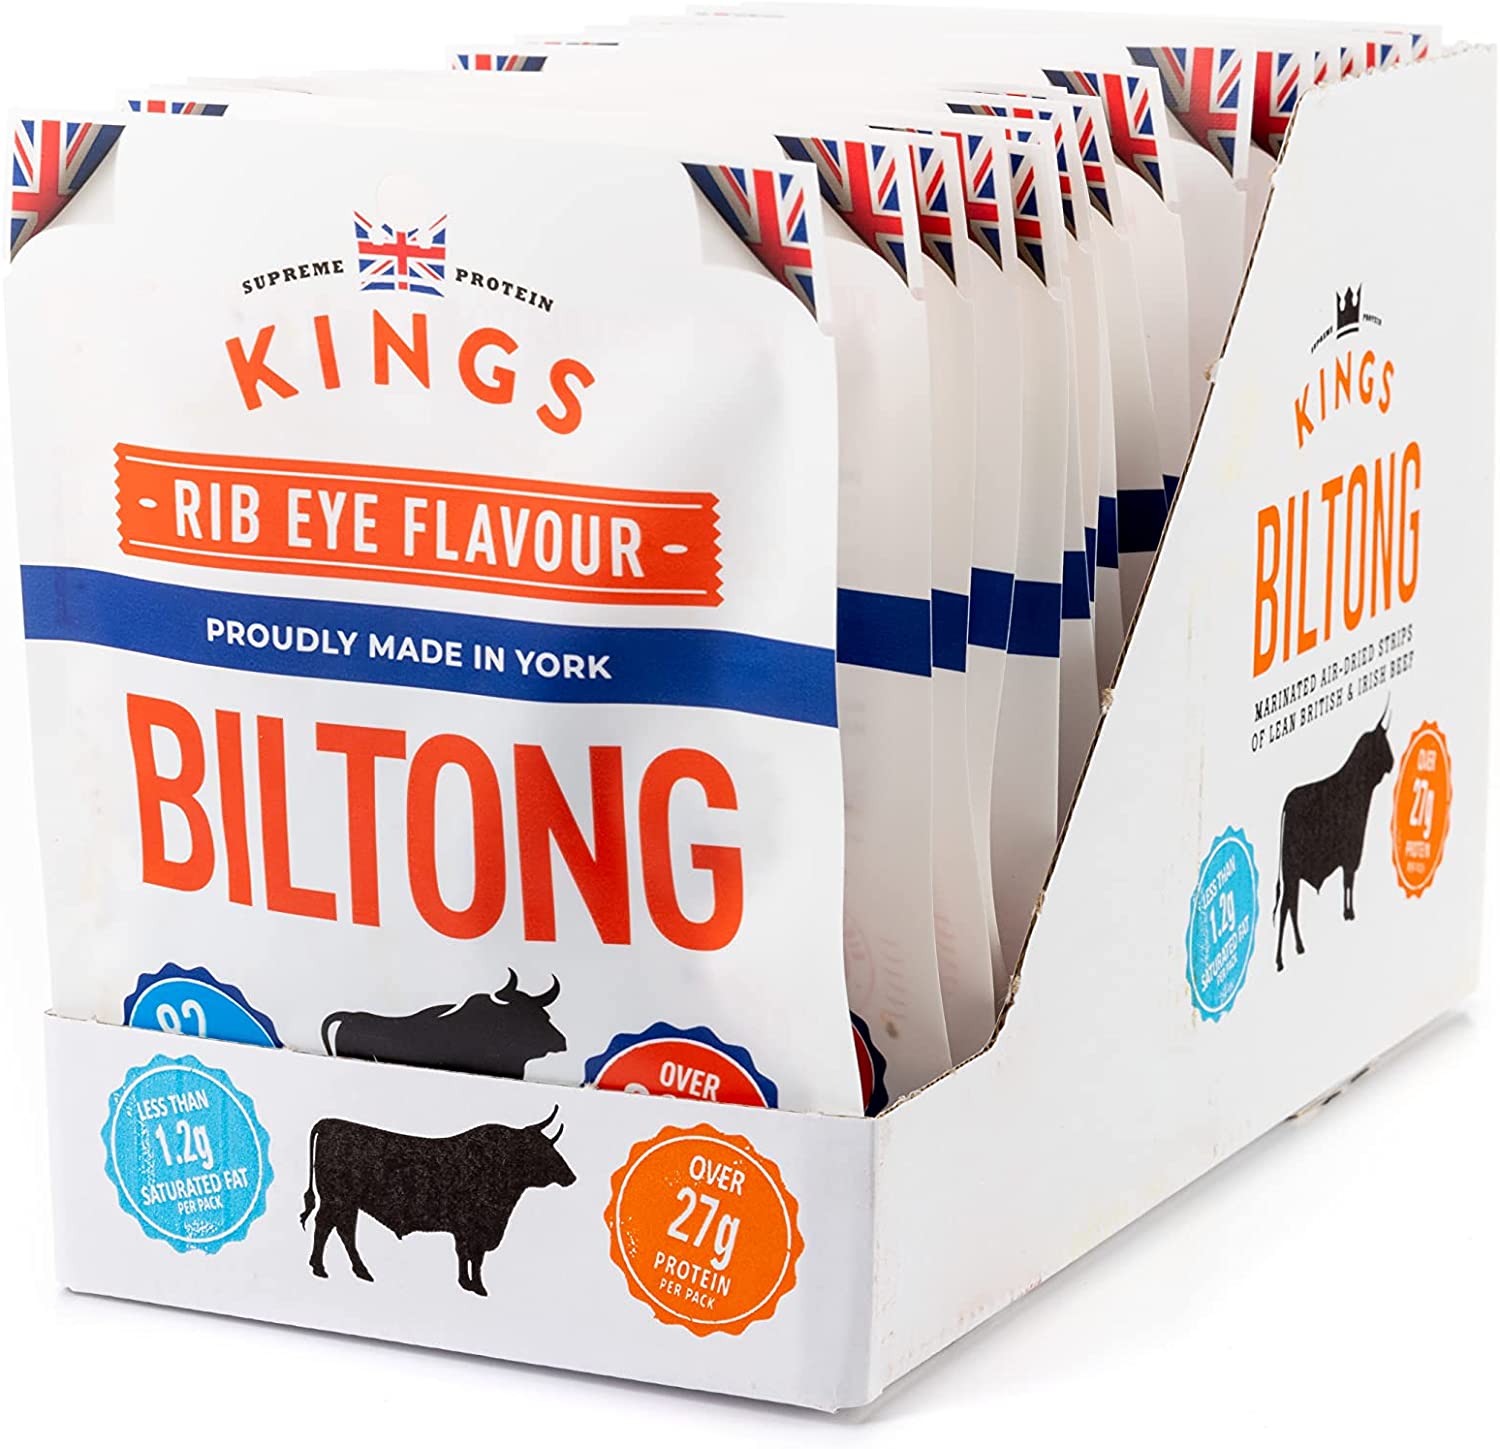 Kings Ribeye Biltong Box 10 Review